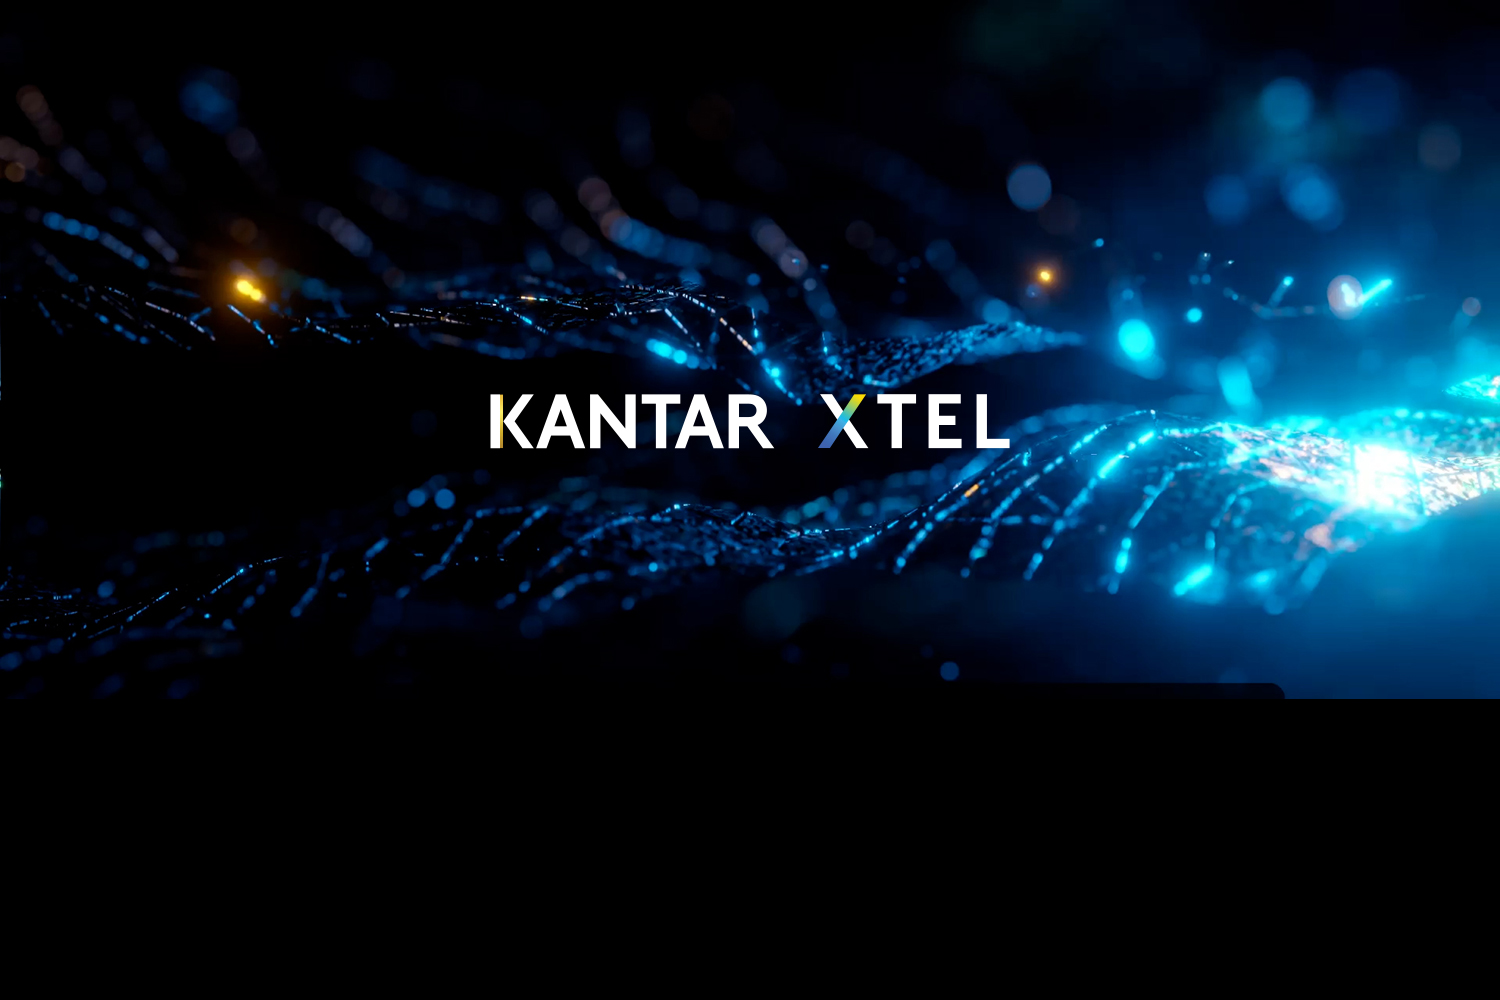 Knatar XTEL